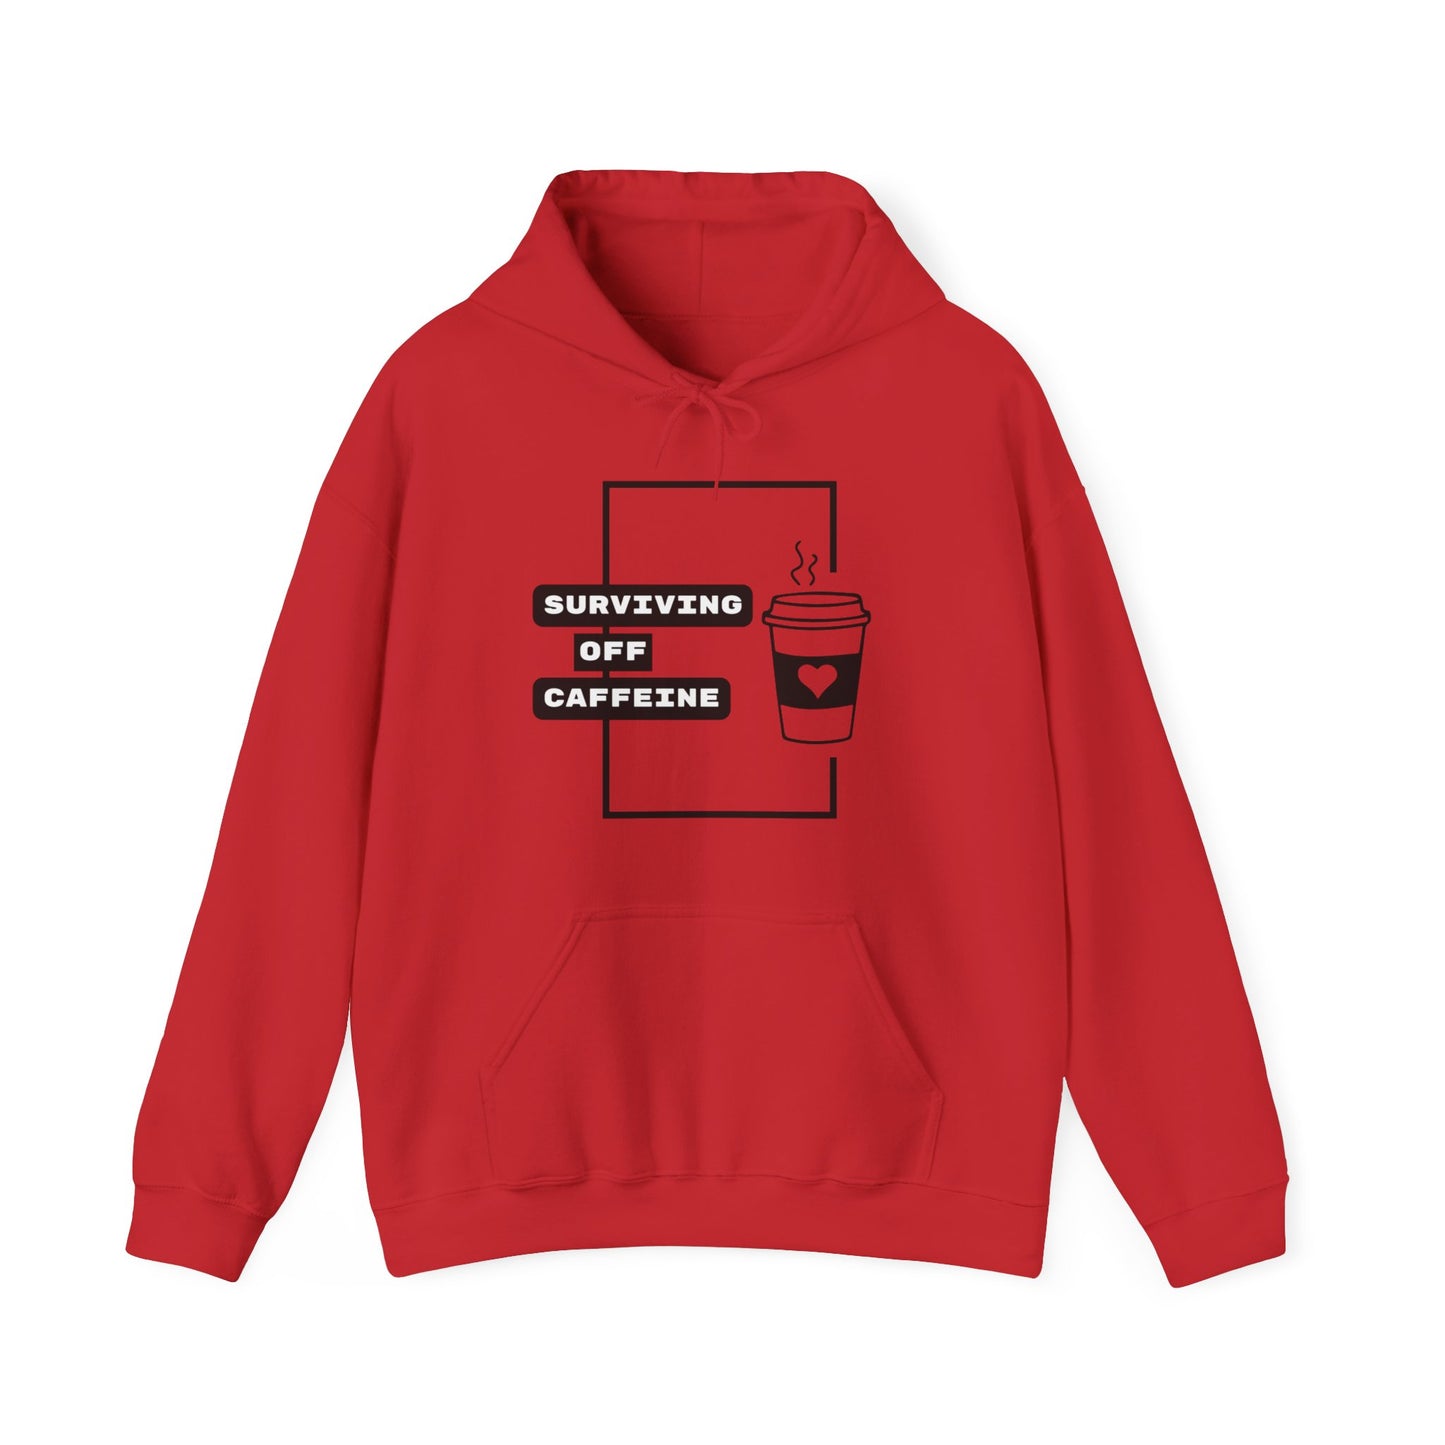 Surviving Off Caffeine - Adult Unisex Hooded Sweatshirt